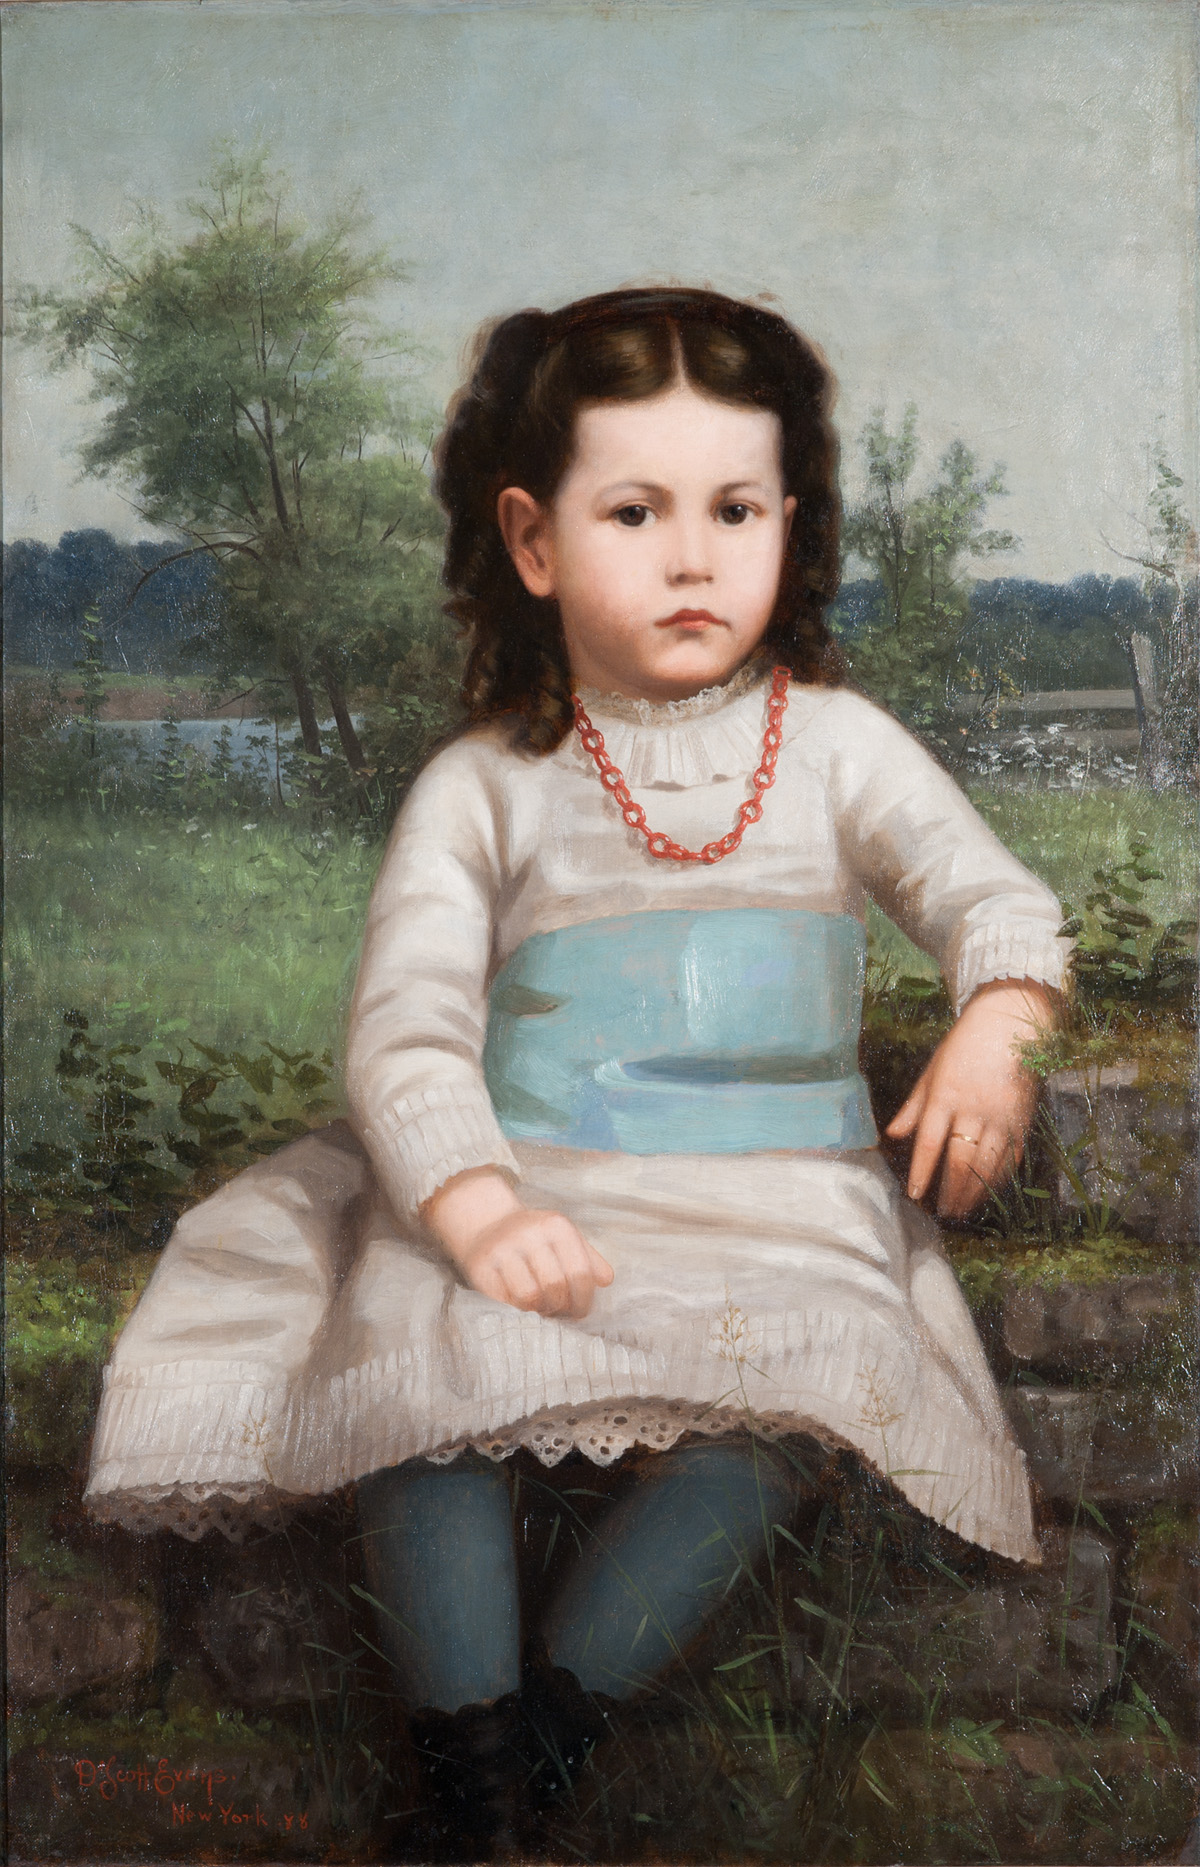 Evans, DeScott - Portrait of Little Girl, 1888 - Richmond Art Museum